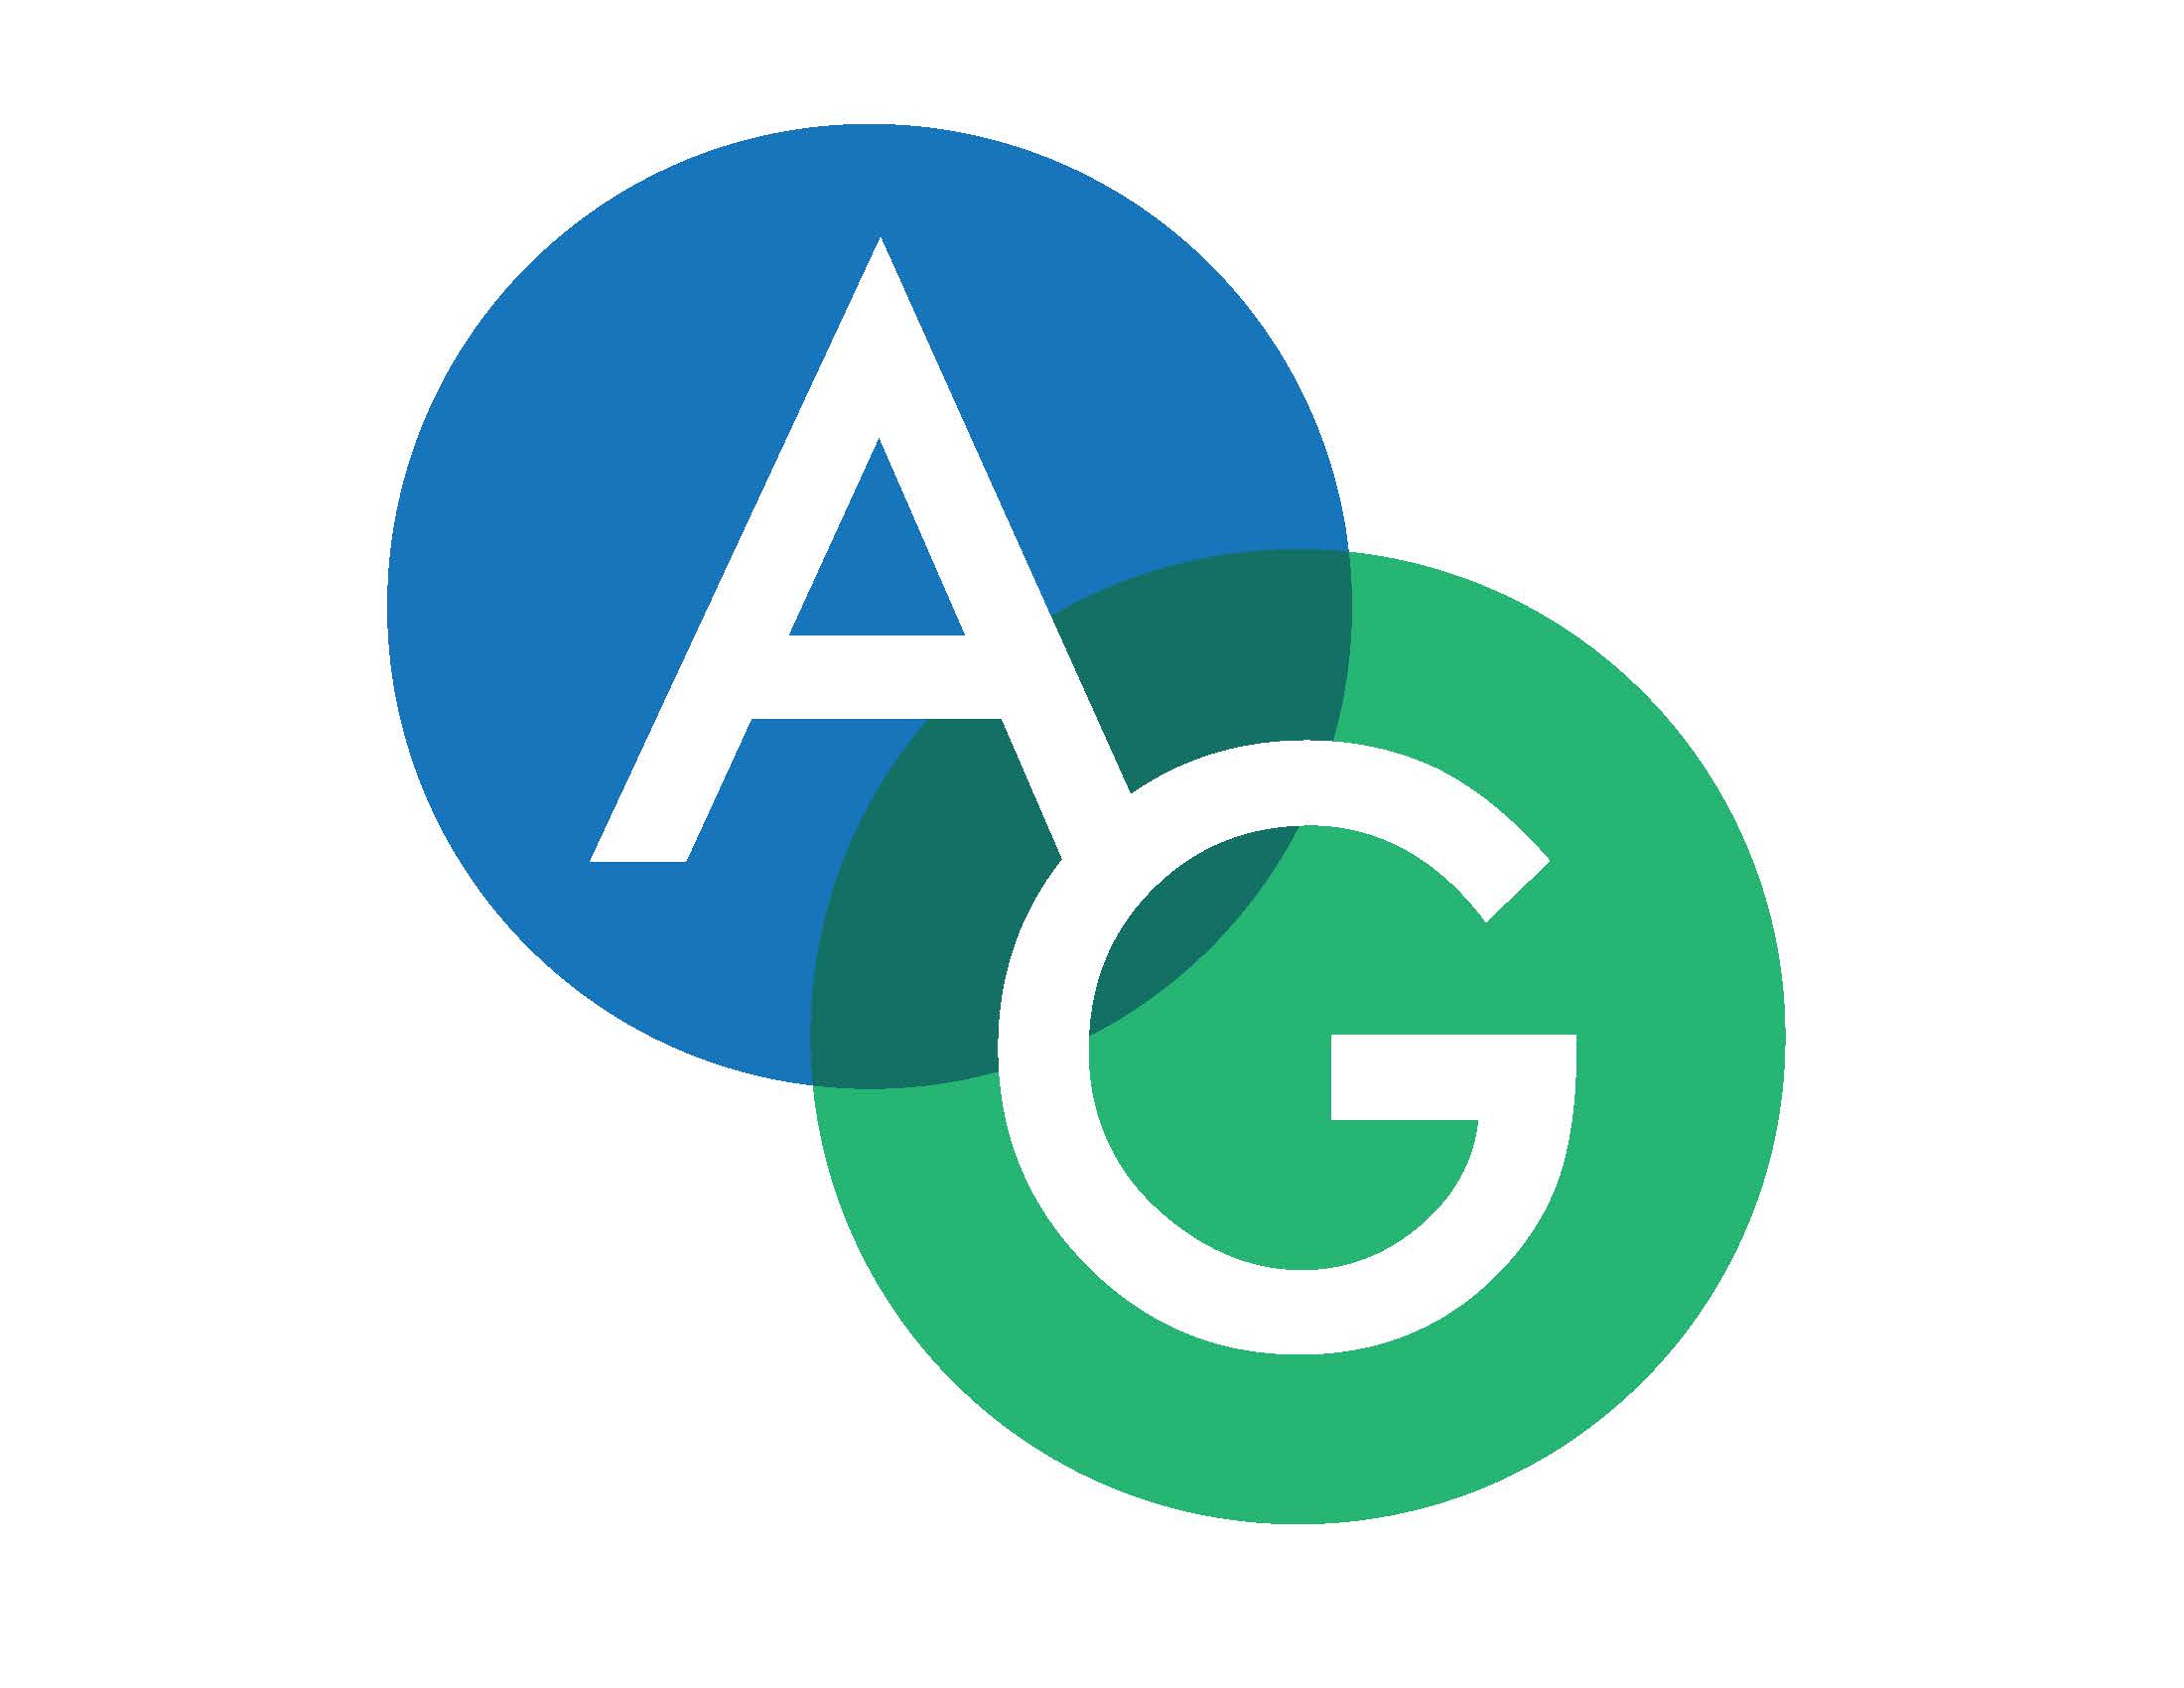 The logo or business face of "Adtigo Group"